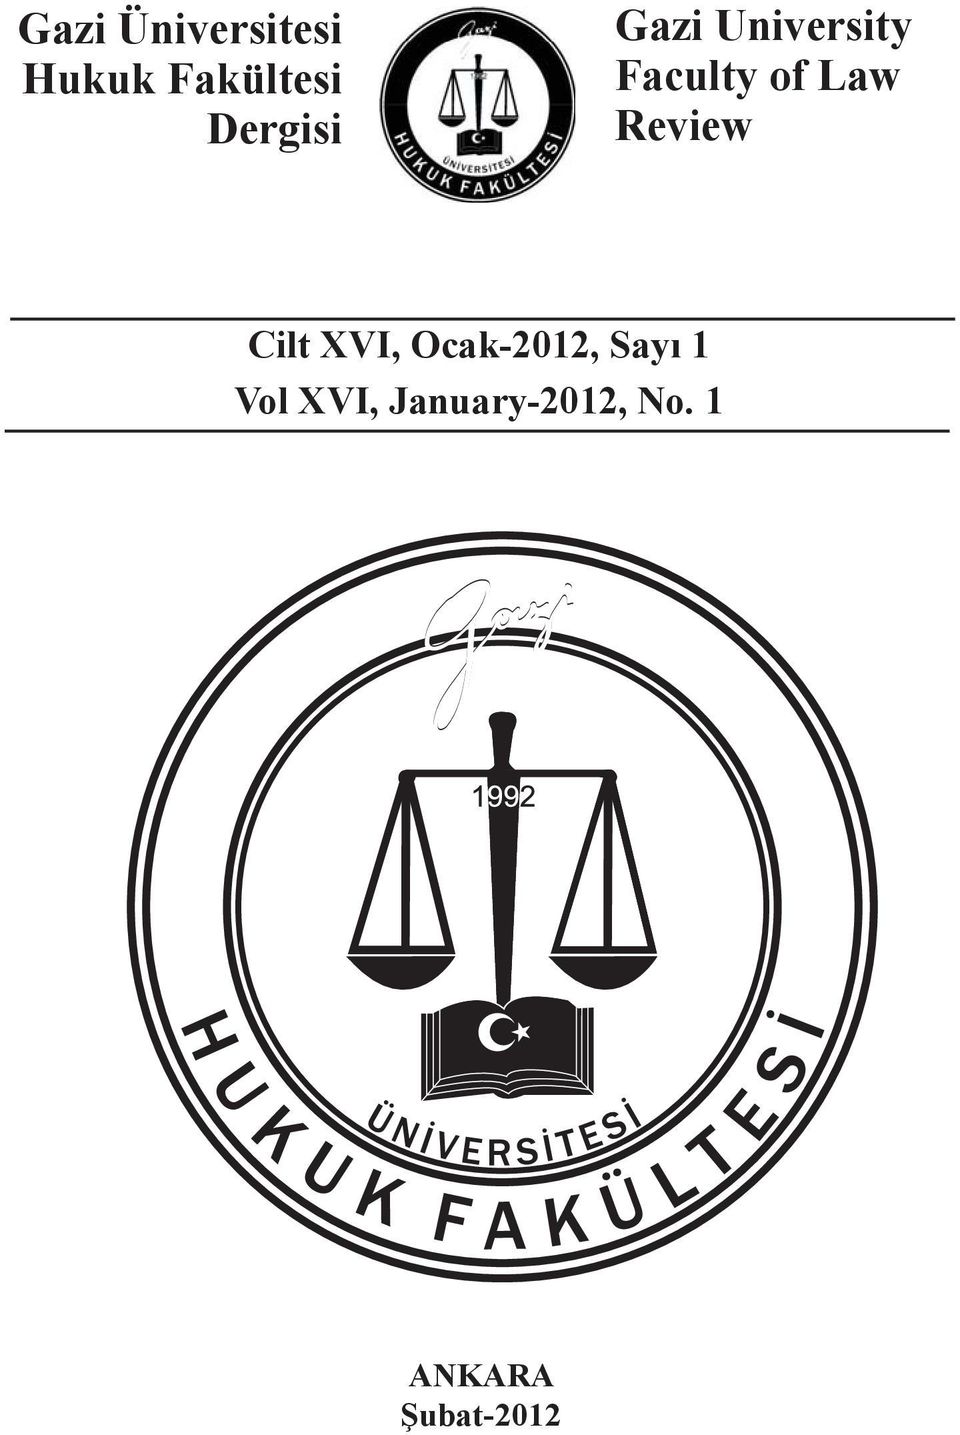 Review Cilt XVI, Ocak-2012, Sayı 1 Vol